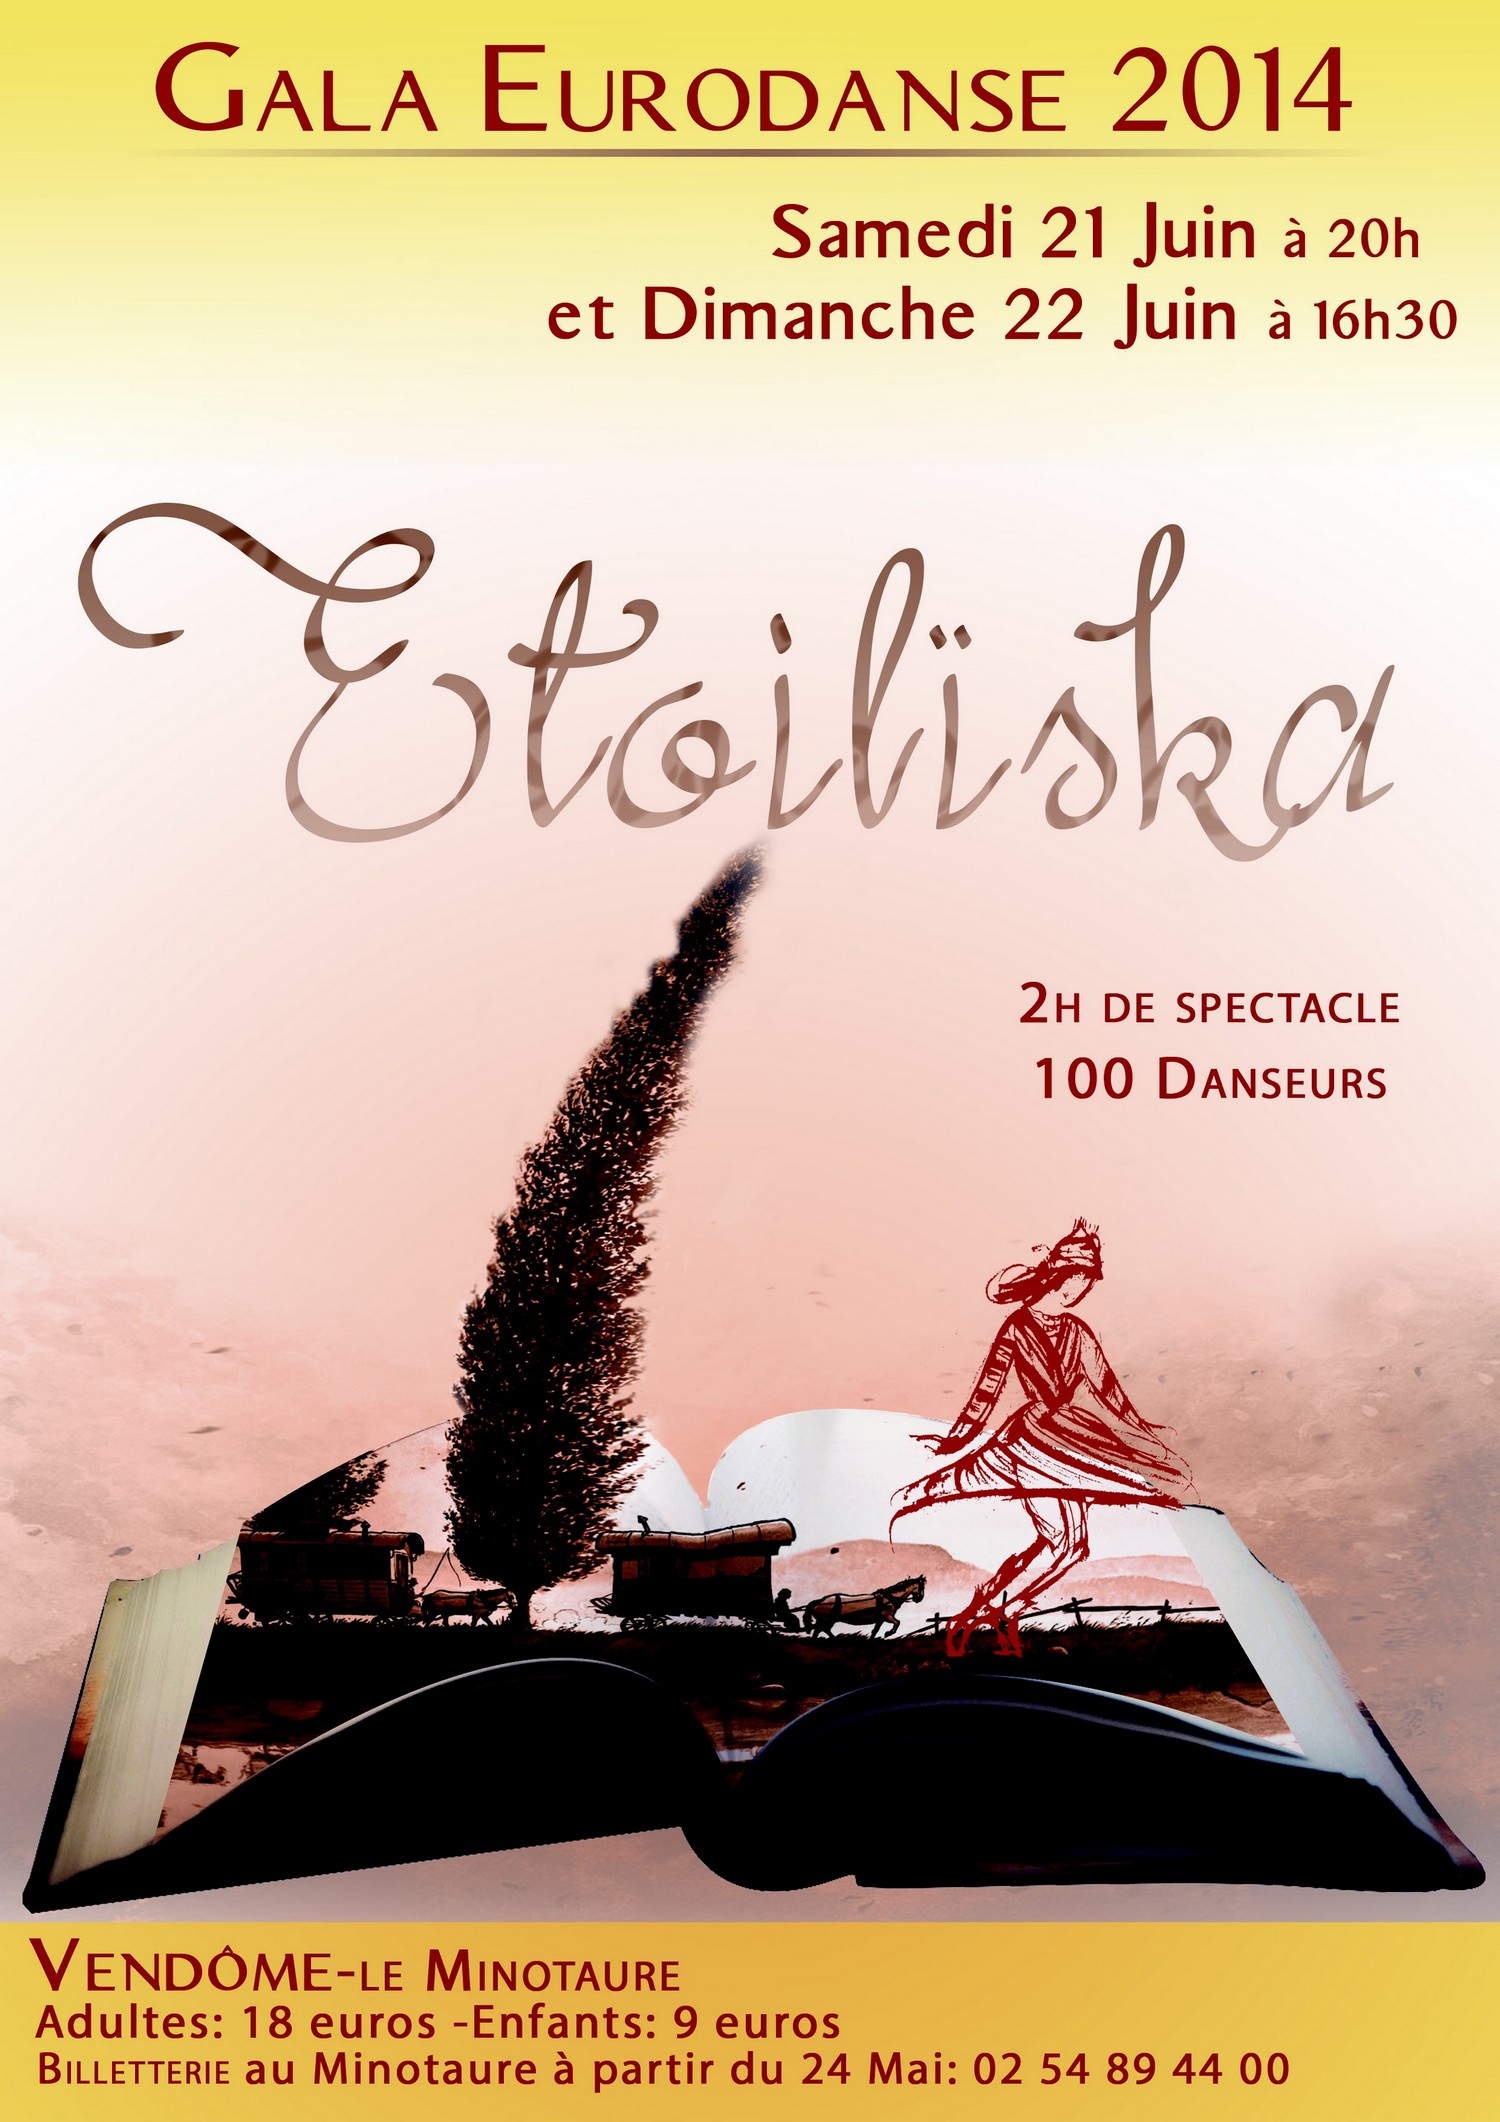 Etoilska, gala Eurodanse 2014